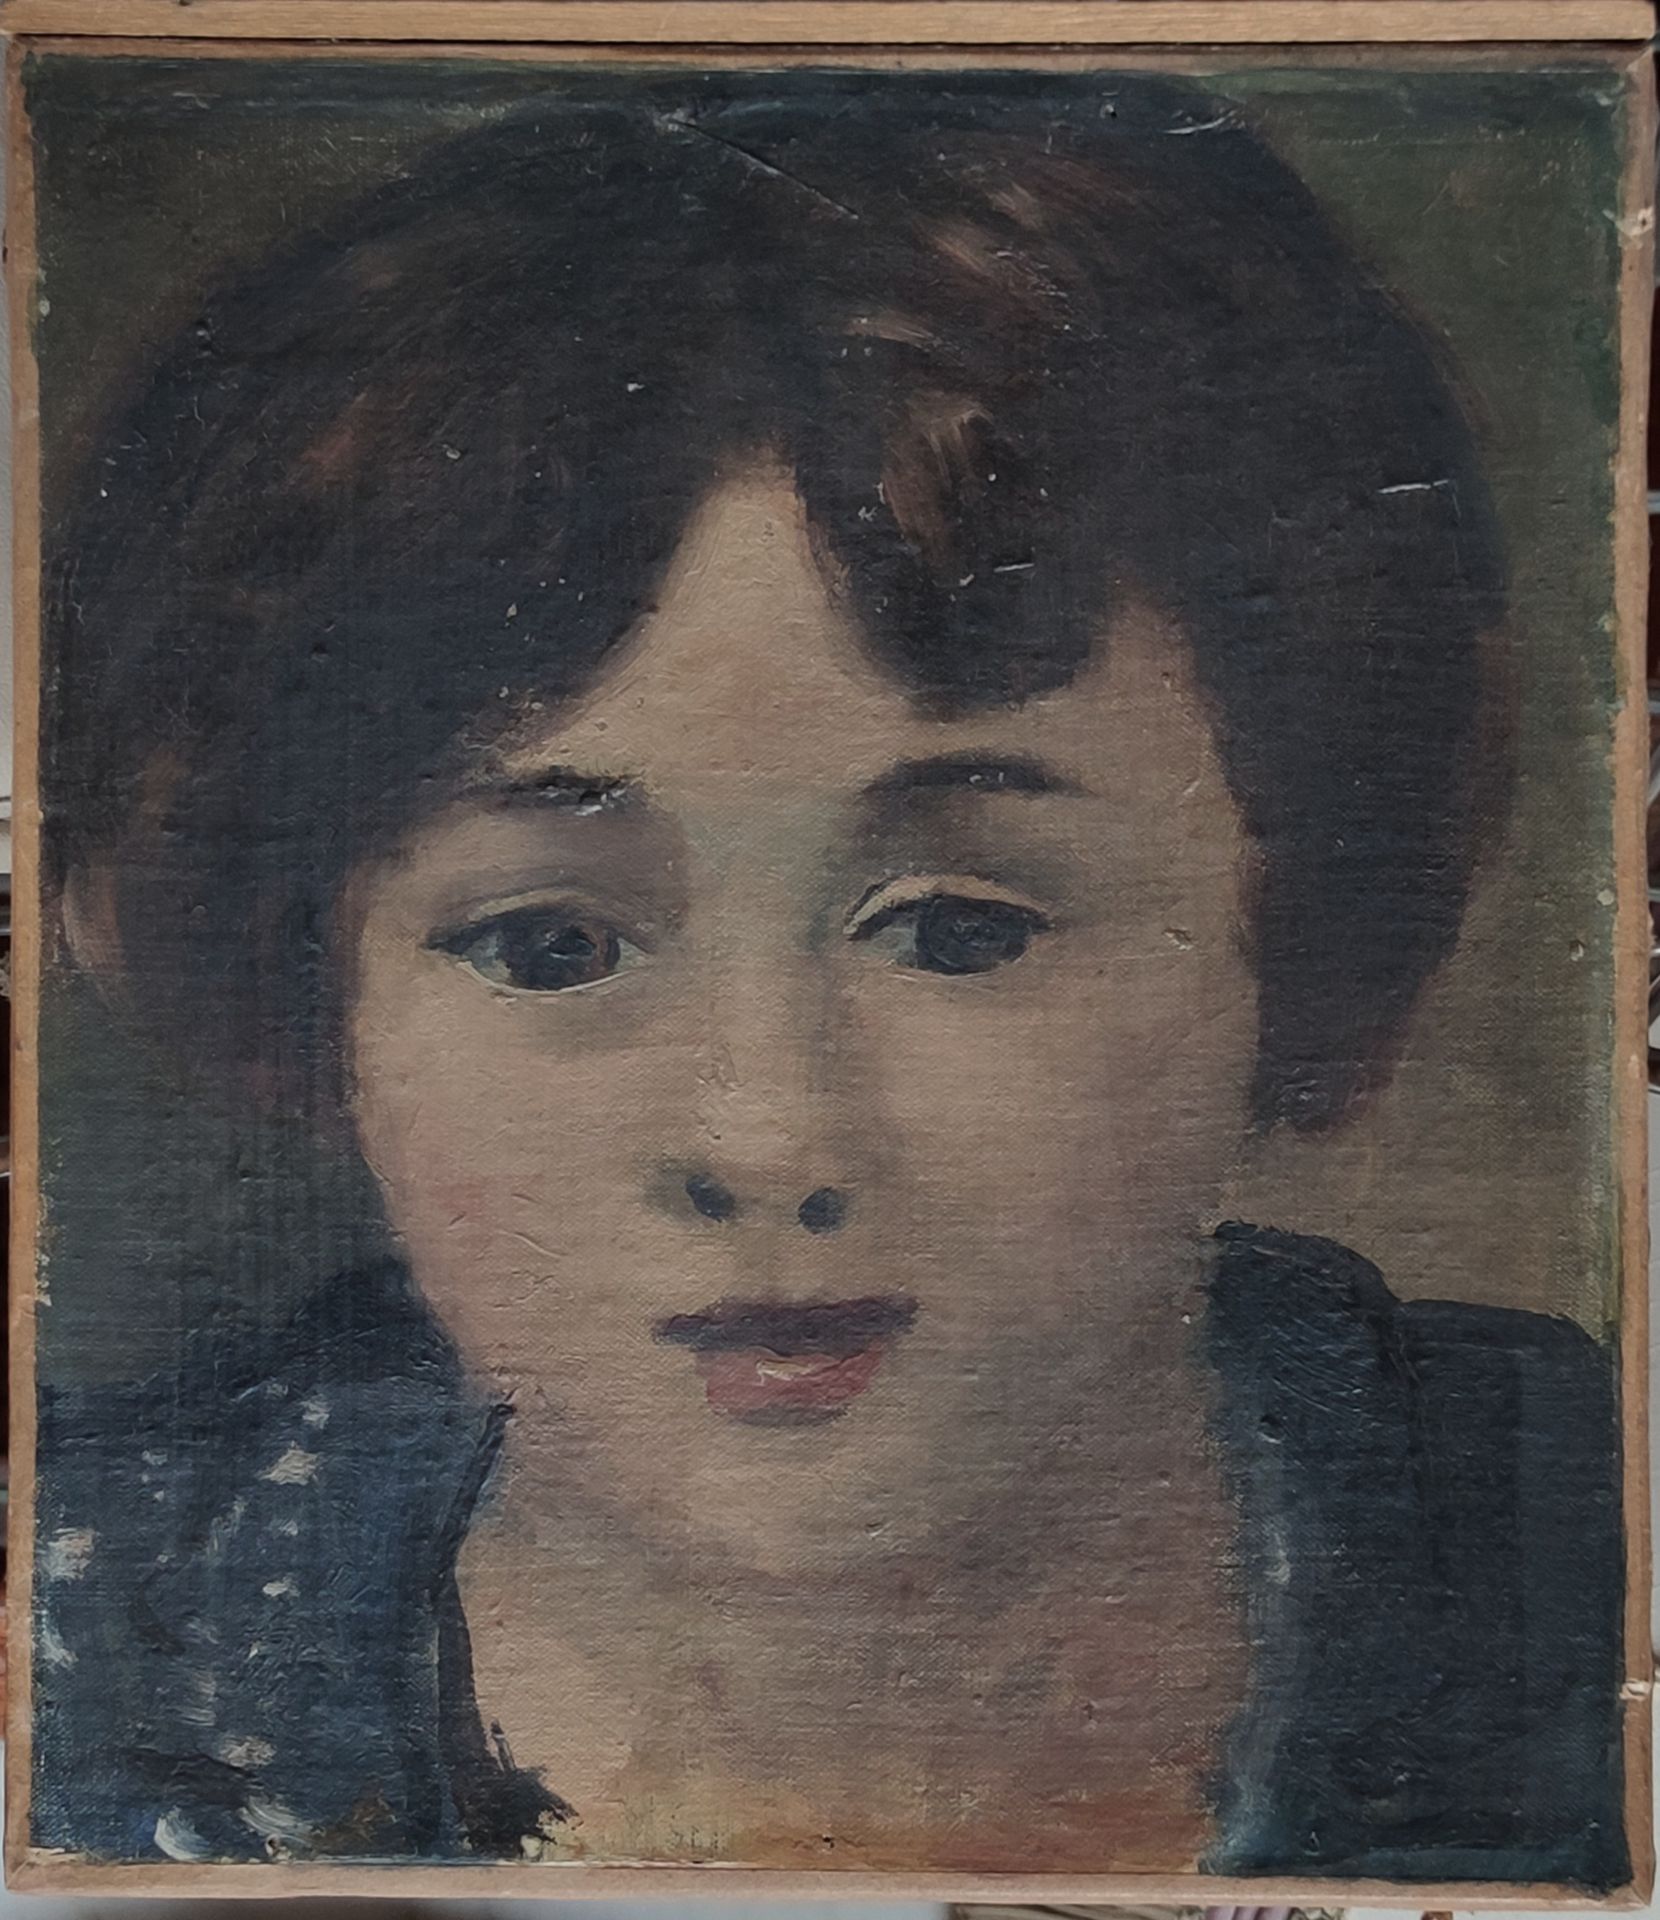 Null 
安德烈-德兰 (1880 - 1954)

一个女人的画像

布面油画，无签名 24 X 21.2 cm

(衬里)

德兰夫人签发的真实性证书

&hellip;